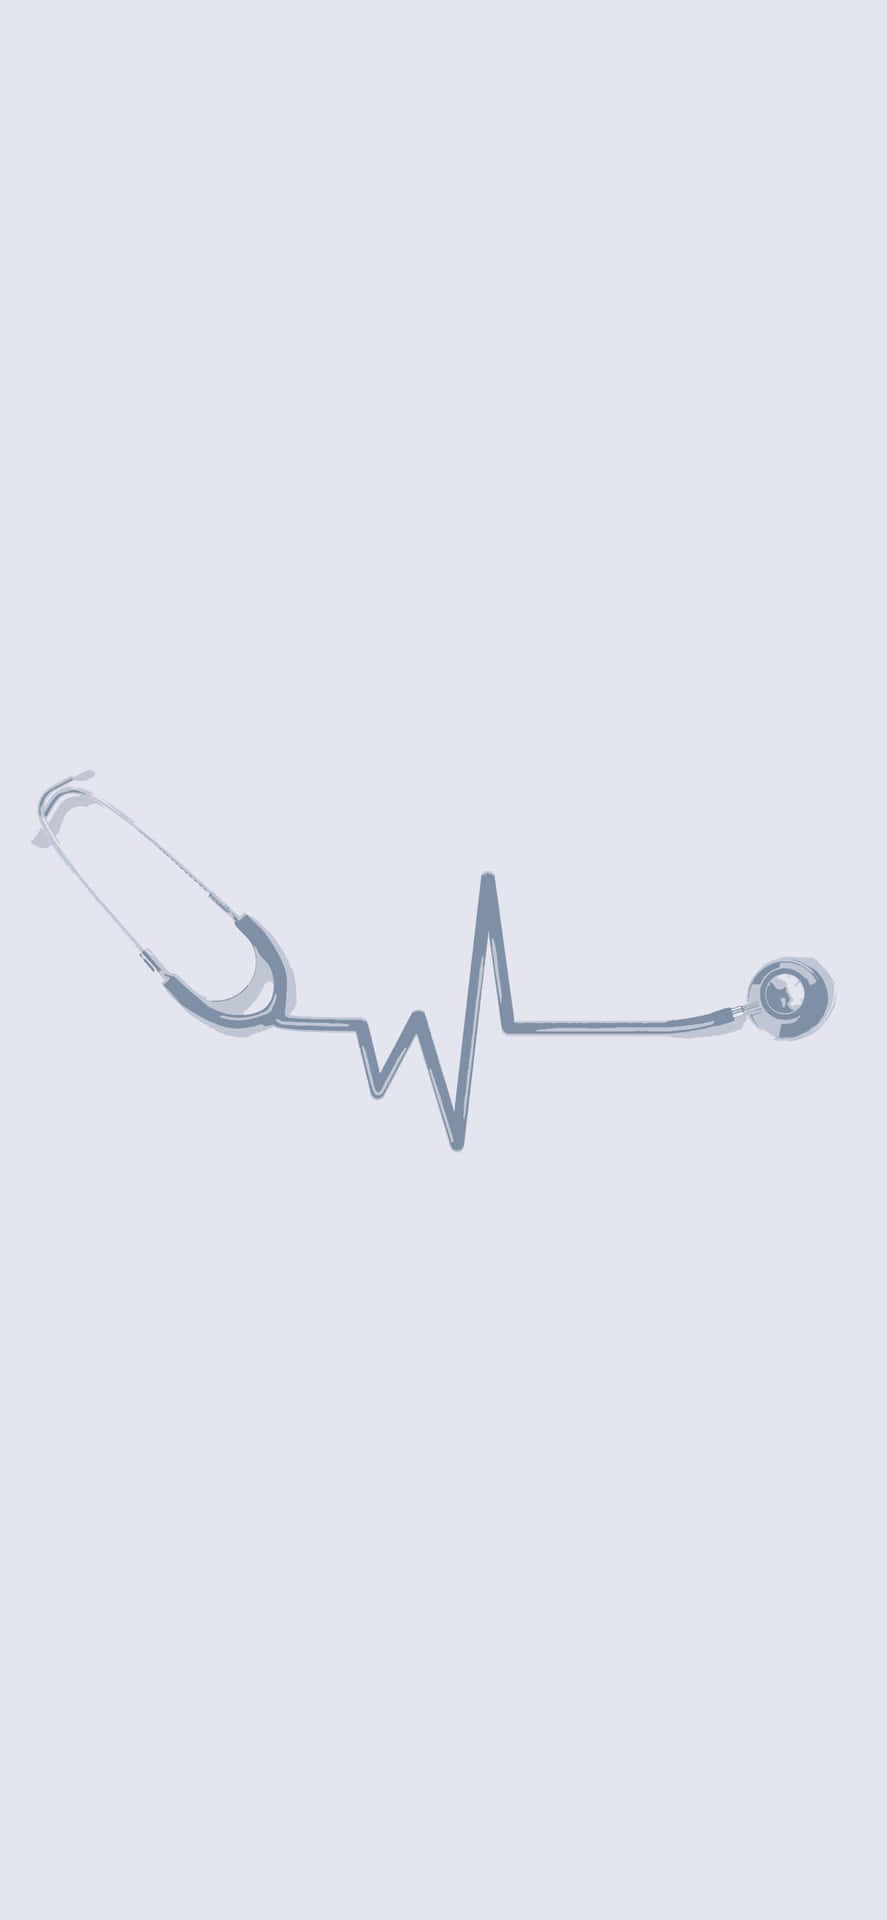 Medical Instruments Heartbeat Design Wallpaper